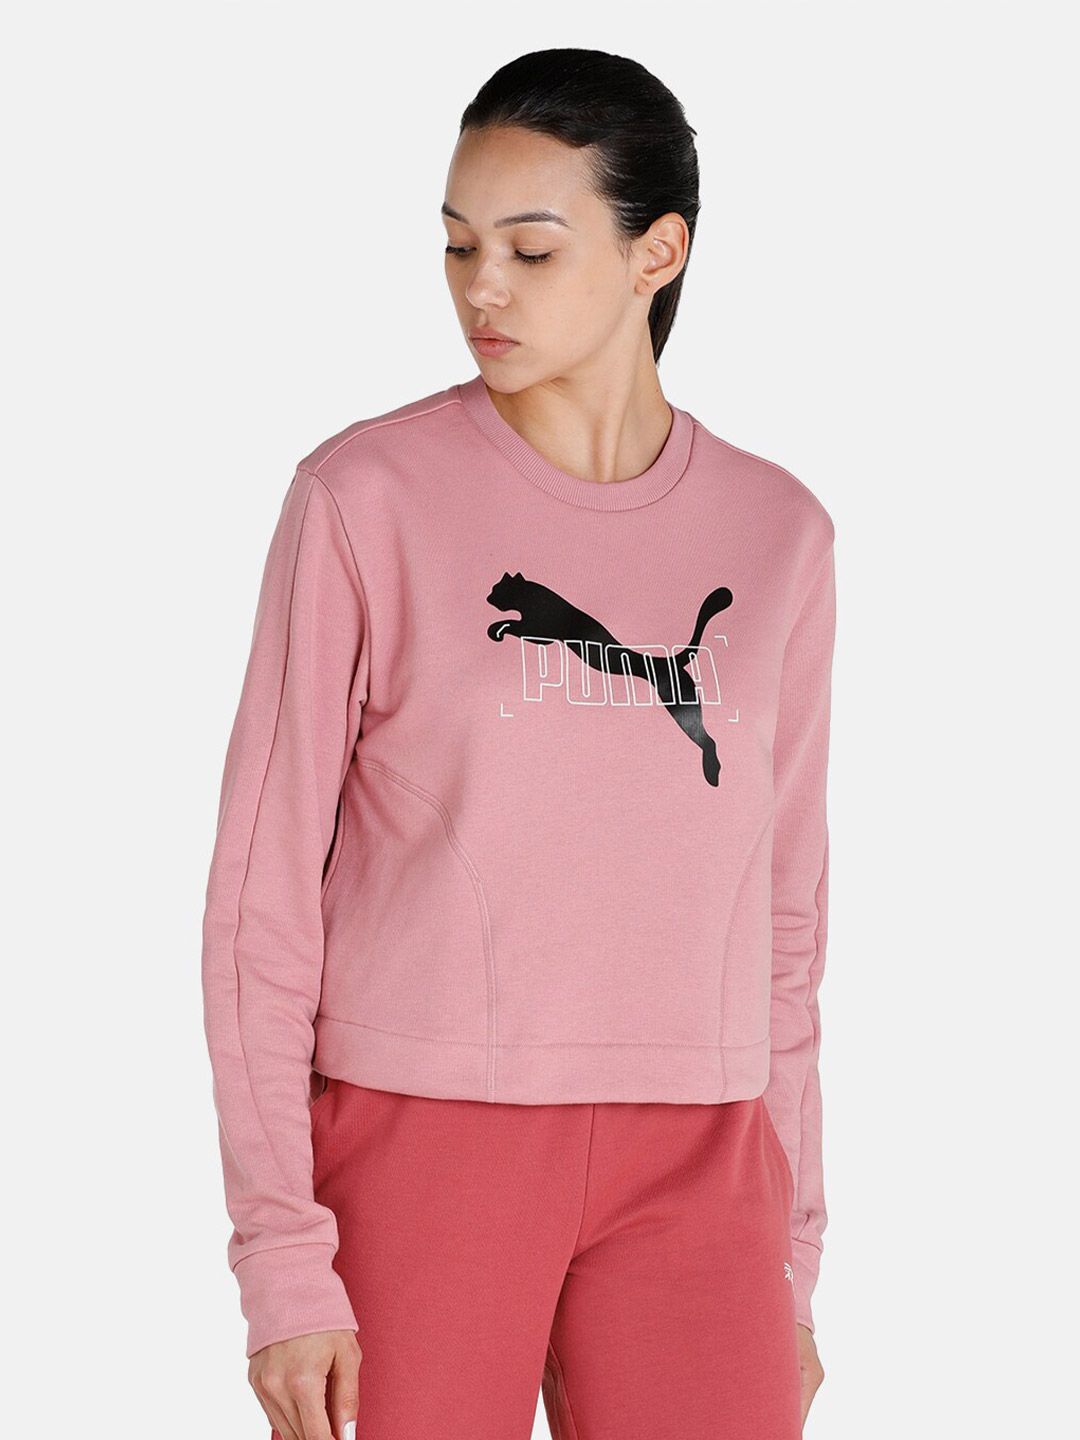 Puma Women Pink Printed Sweatshirt Price in India